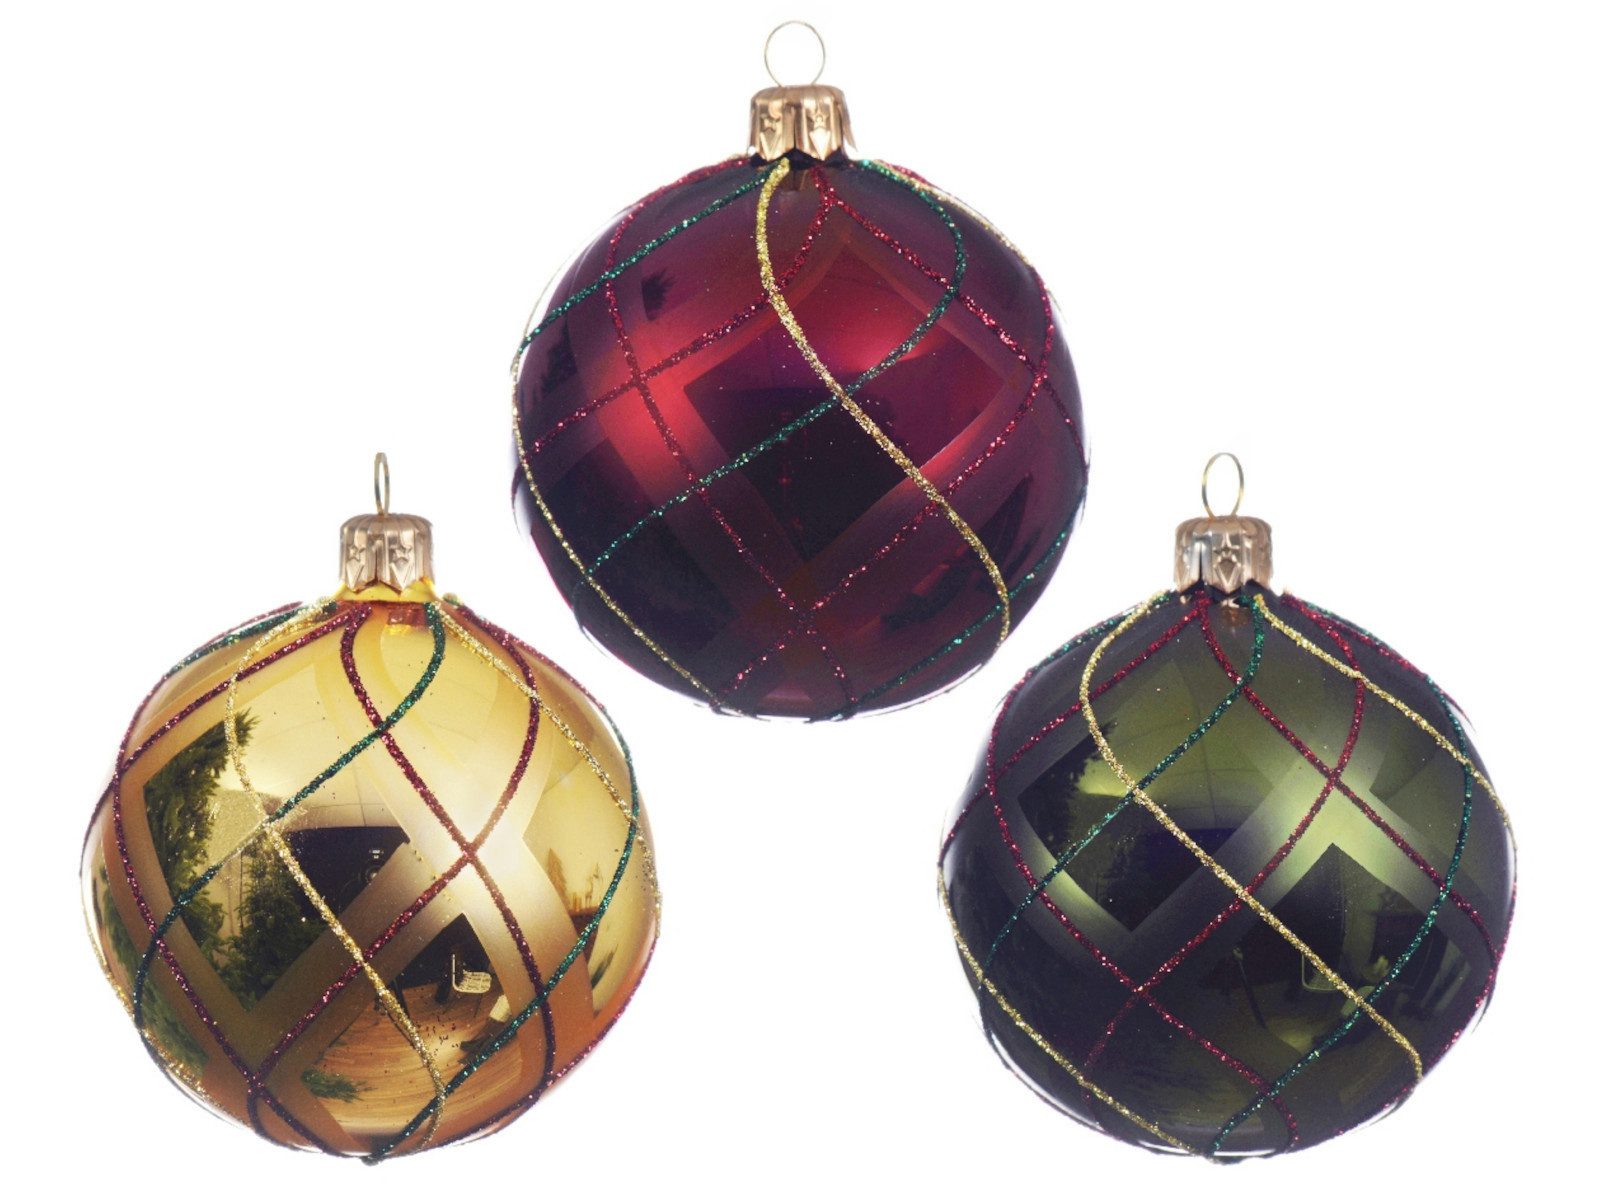 Decoris season decorations Weihnachtsbaumkugel Kugel Glas gestreift sortiert 8 cm (1 StŸck)